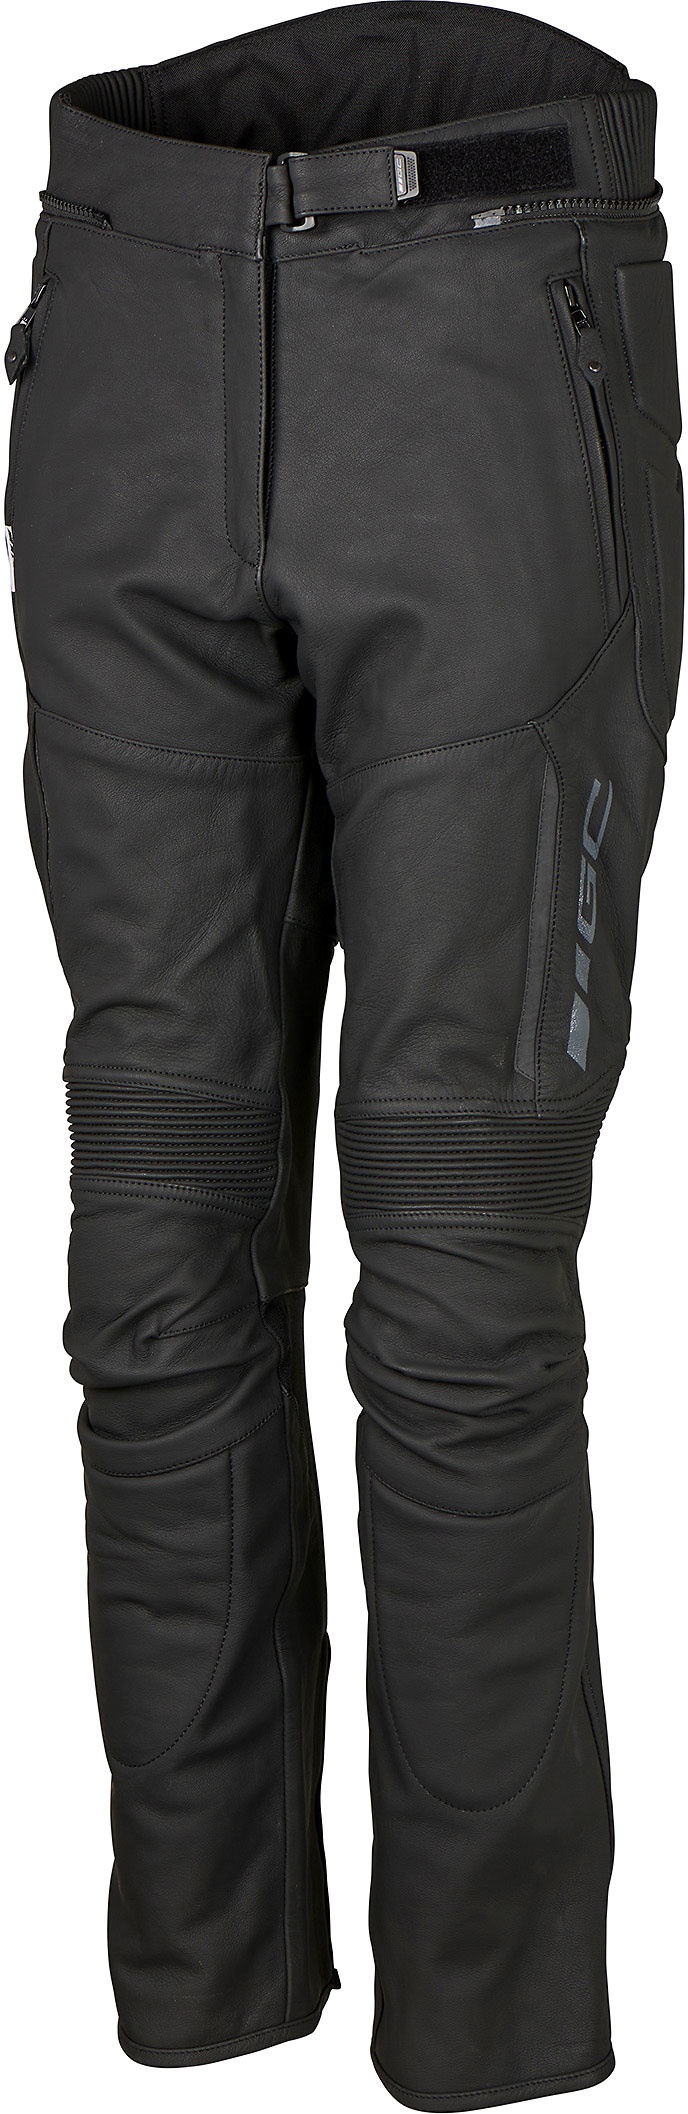 GC Bikewear Sienna, pantalon en cuir pour femmes - Noir - 38